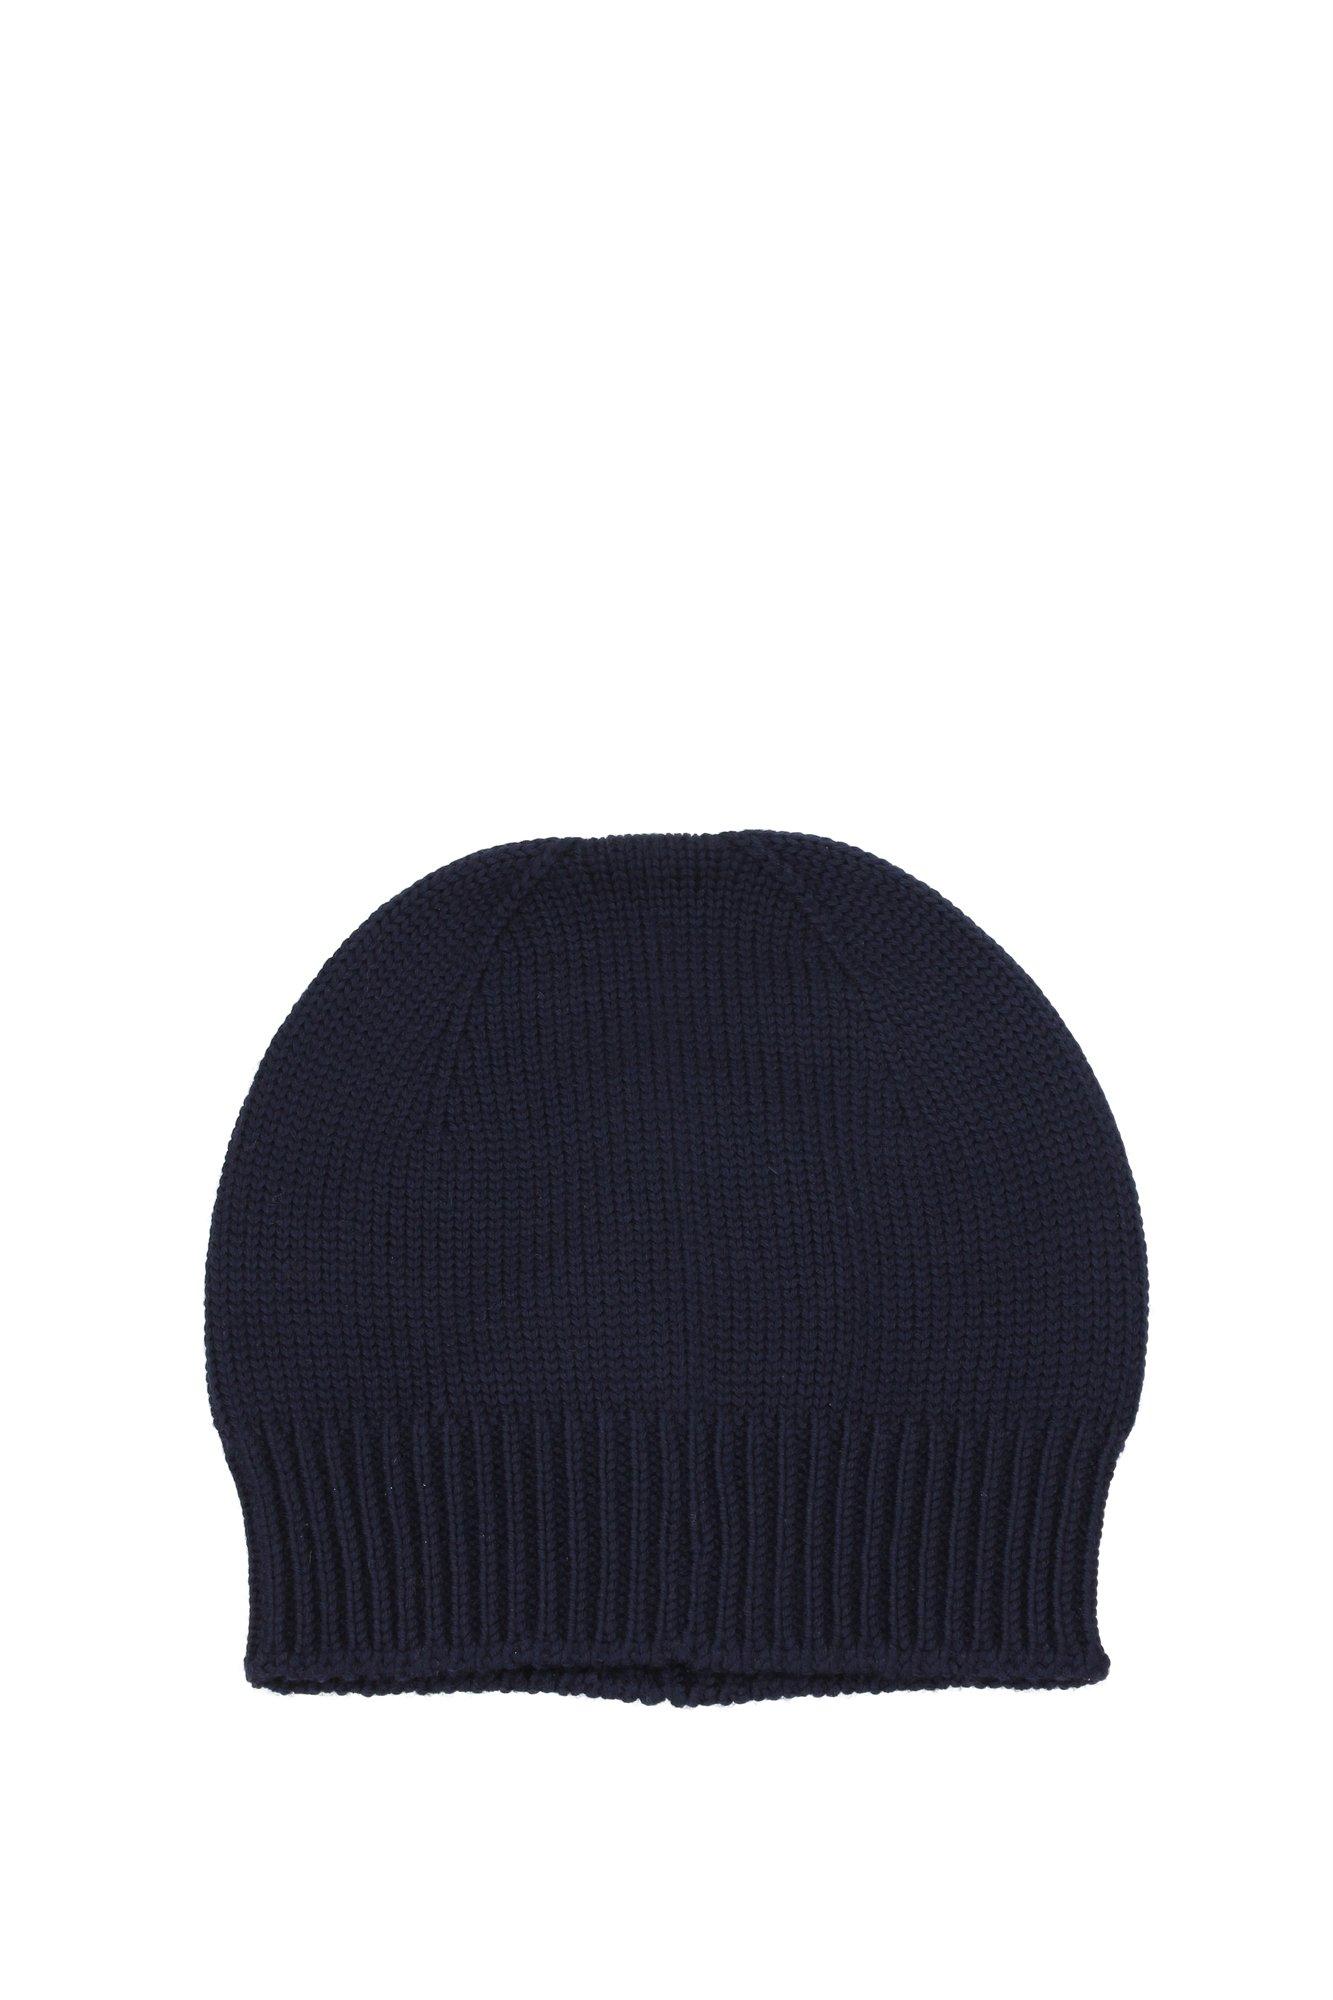 Prada Wool Hats Men Blue for Men - Save 1% - Lyst